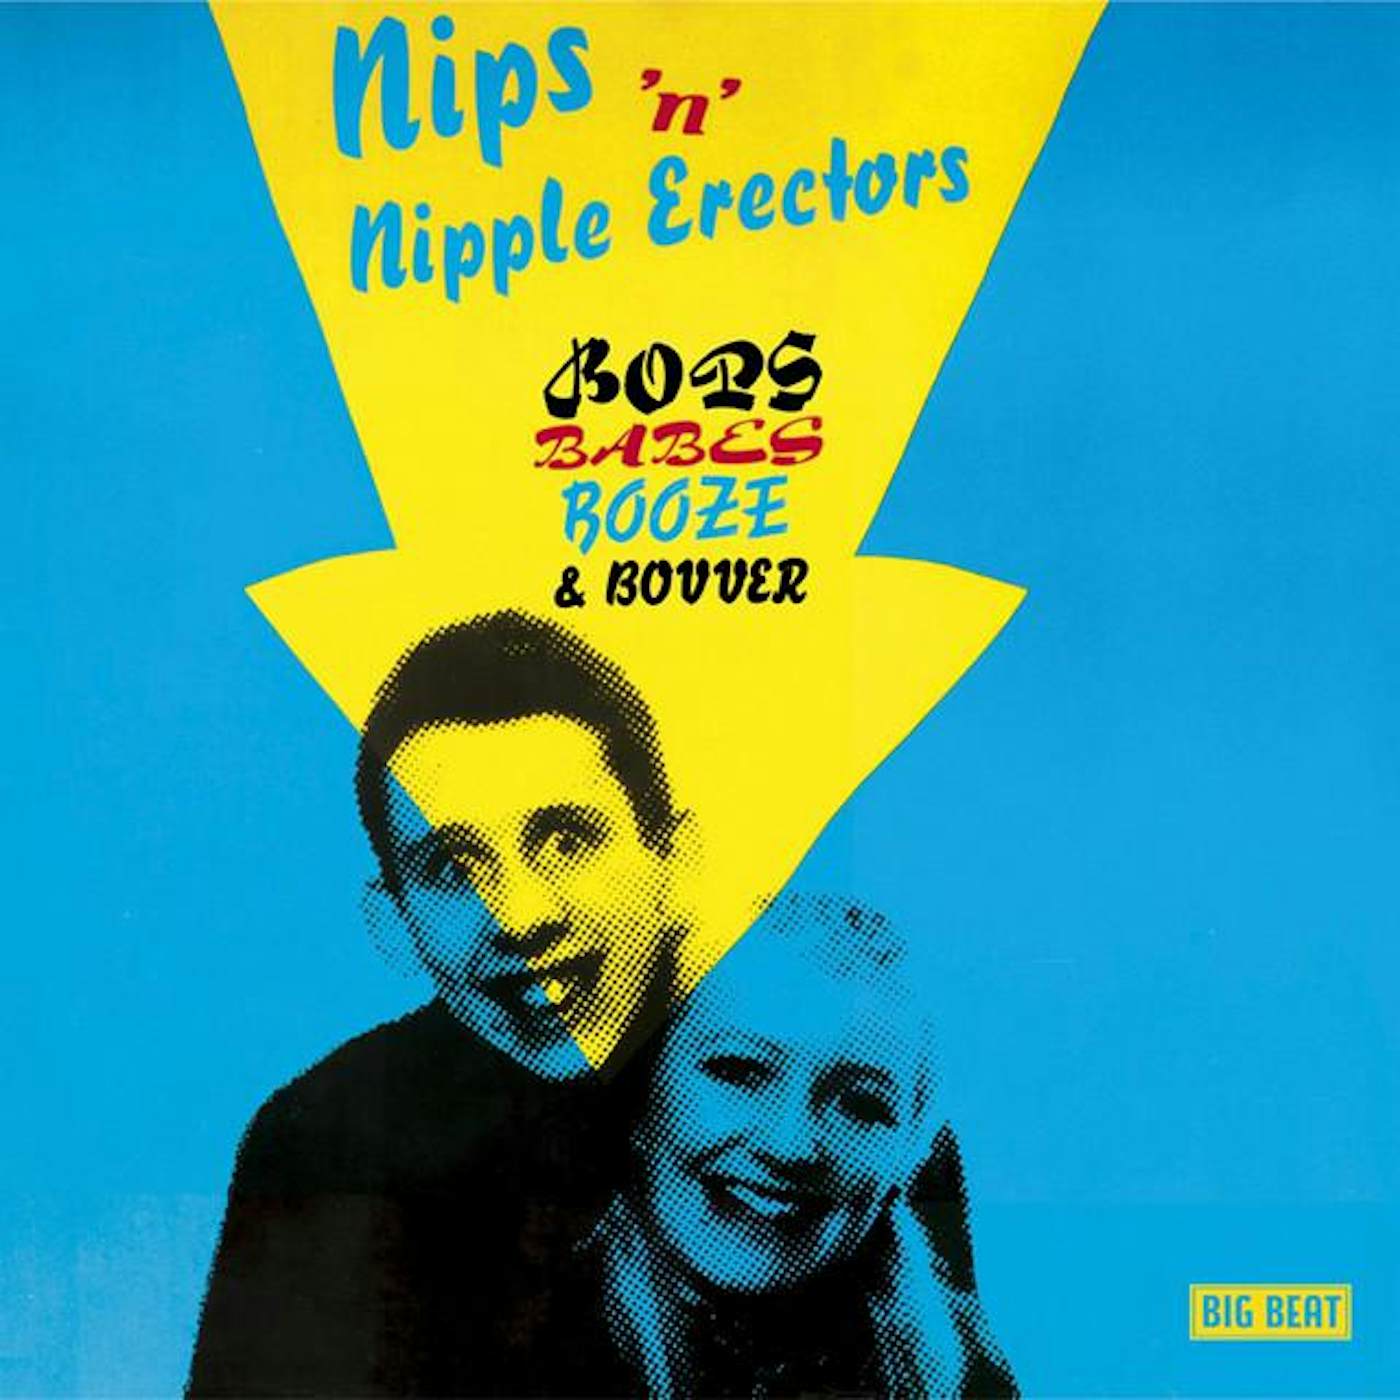 The Nips 'N' Nipple Erectors